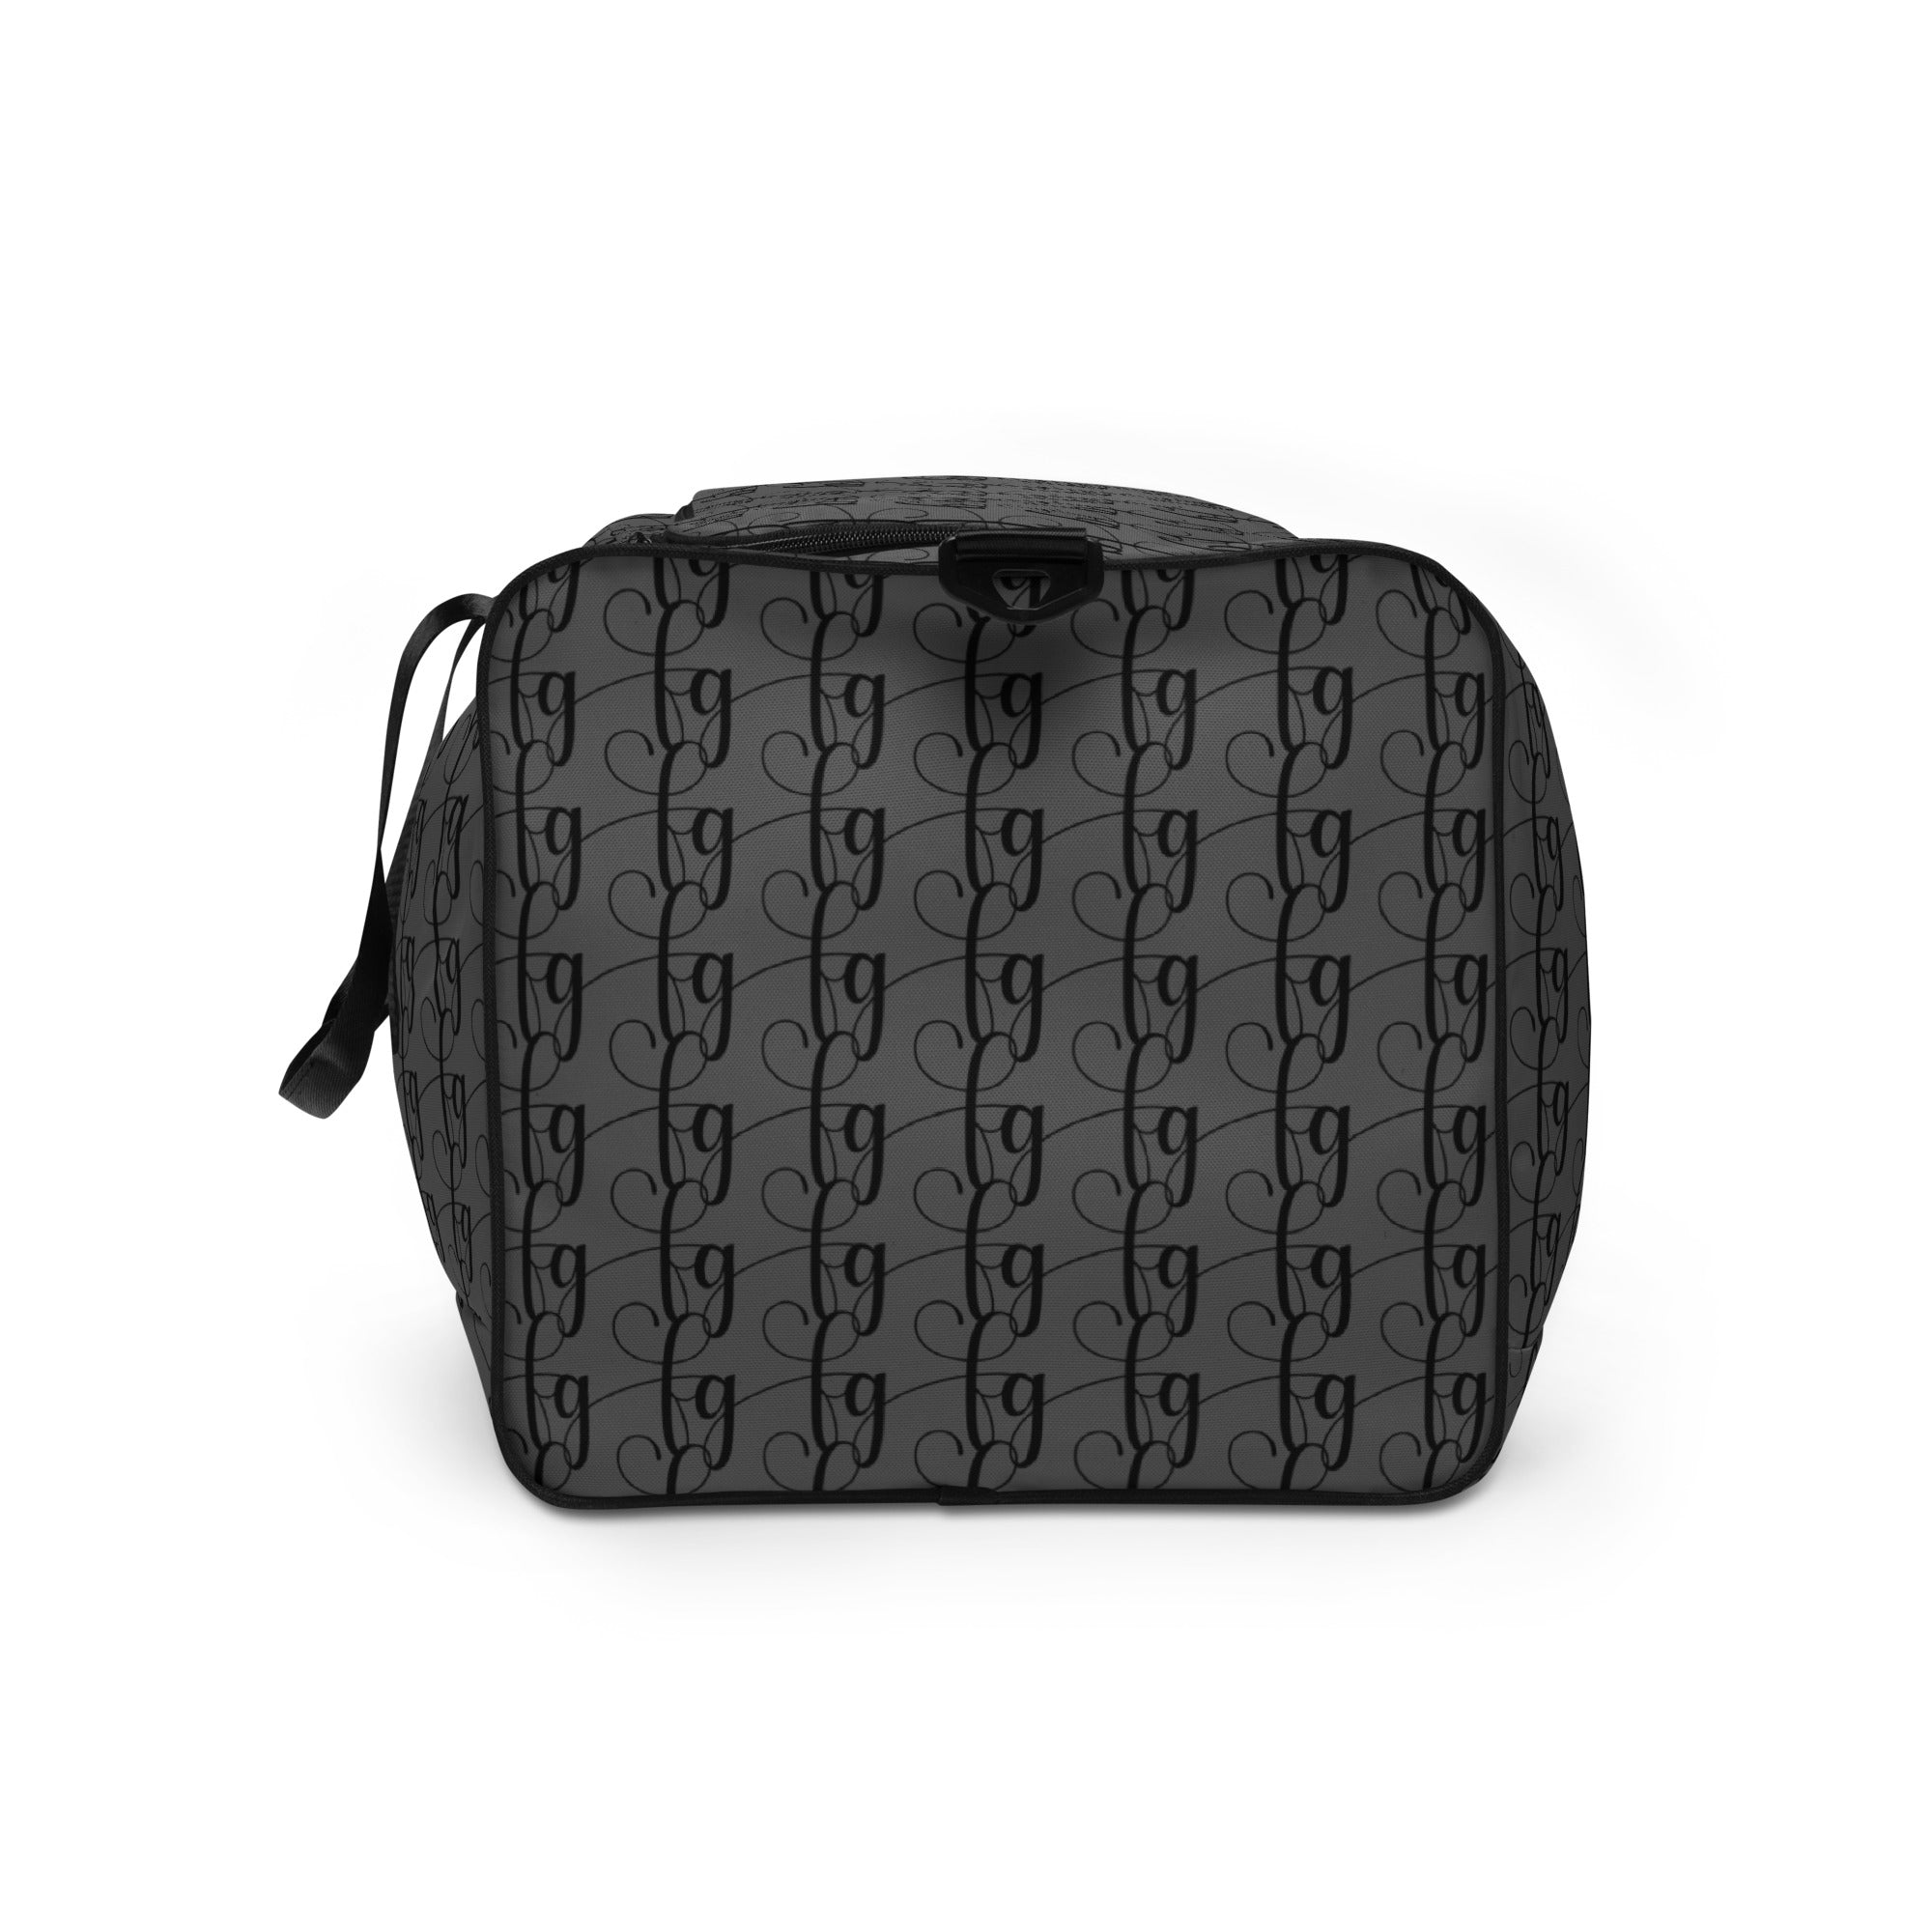 Gray / Black FG Blocked Duffle bag - FleekGoddess